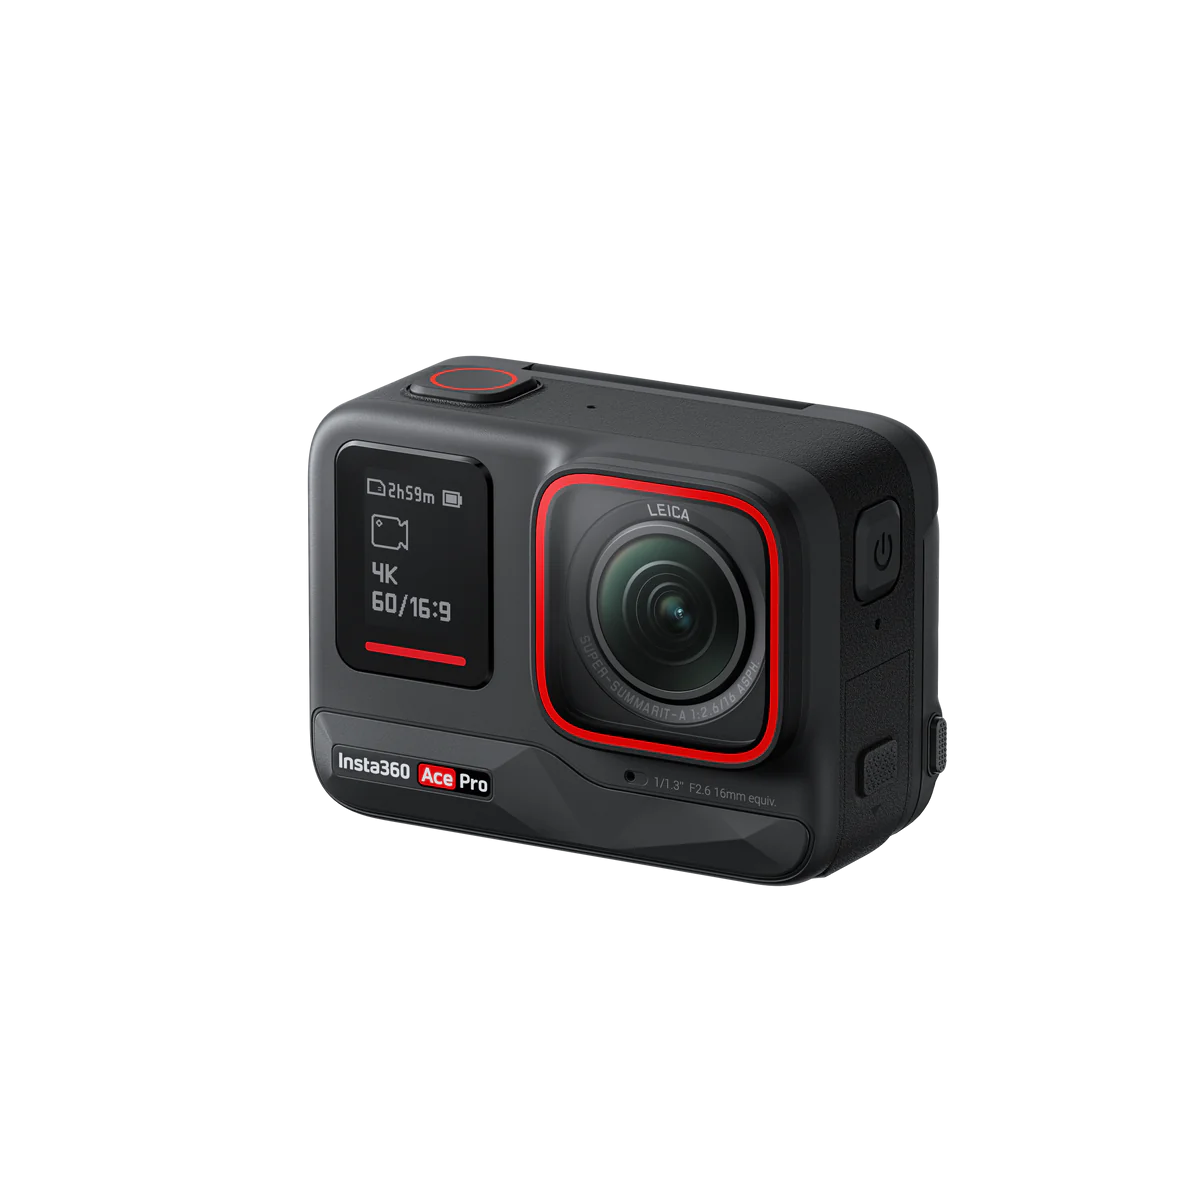 Insta360 Ace Pro Action Camera